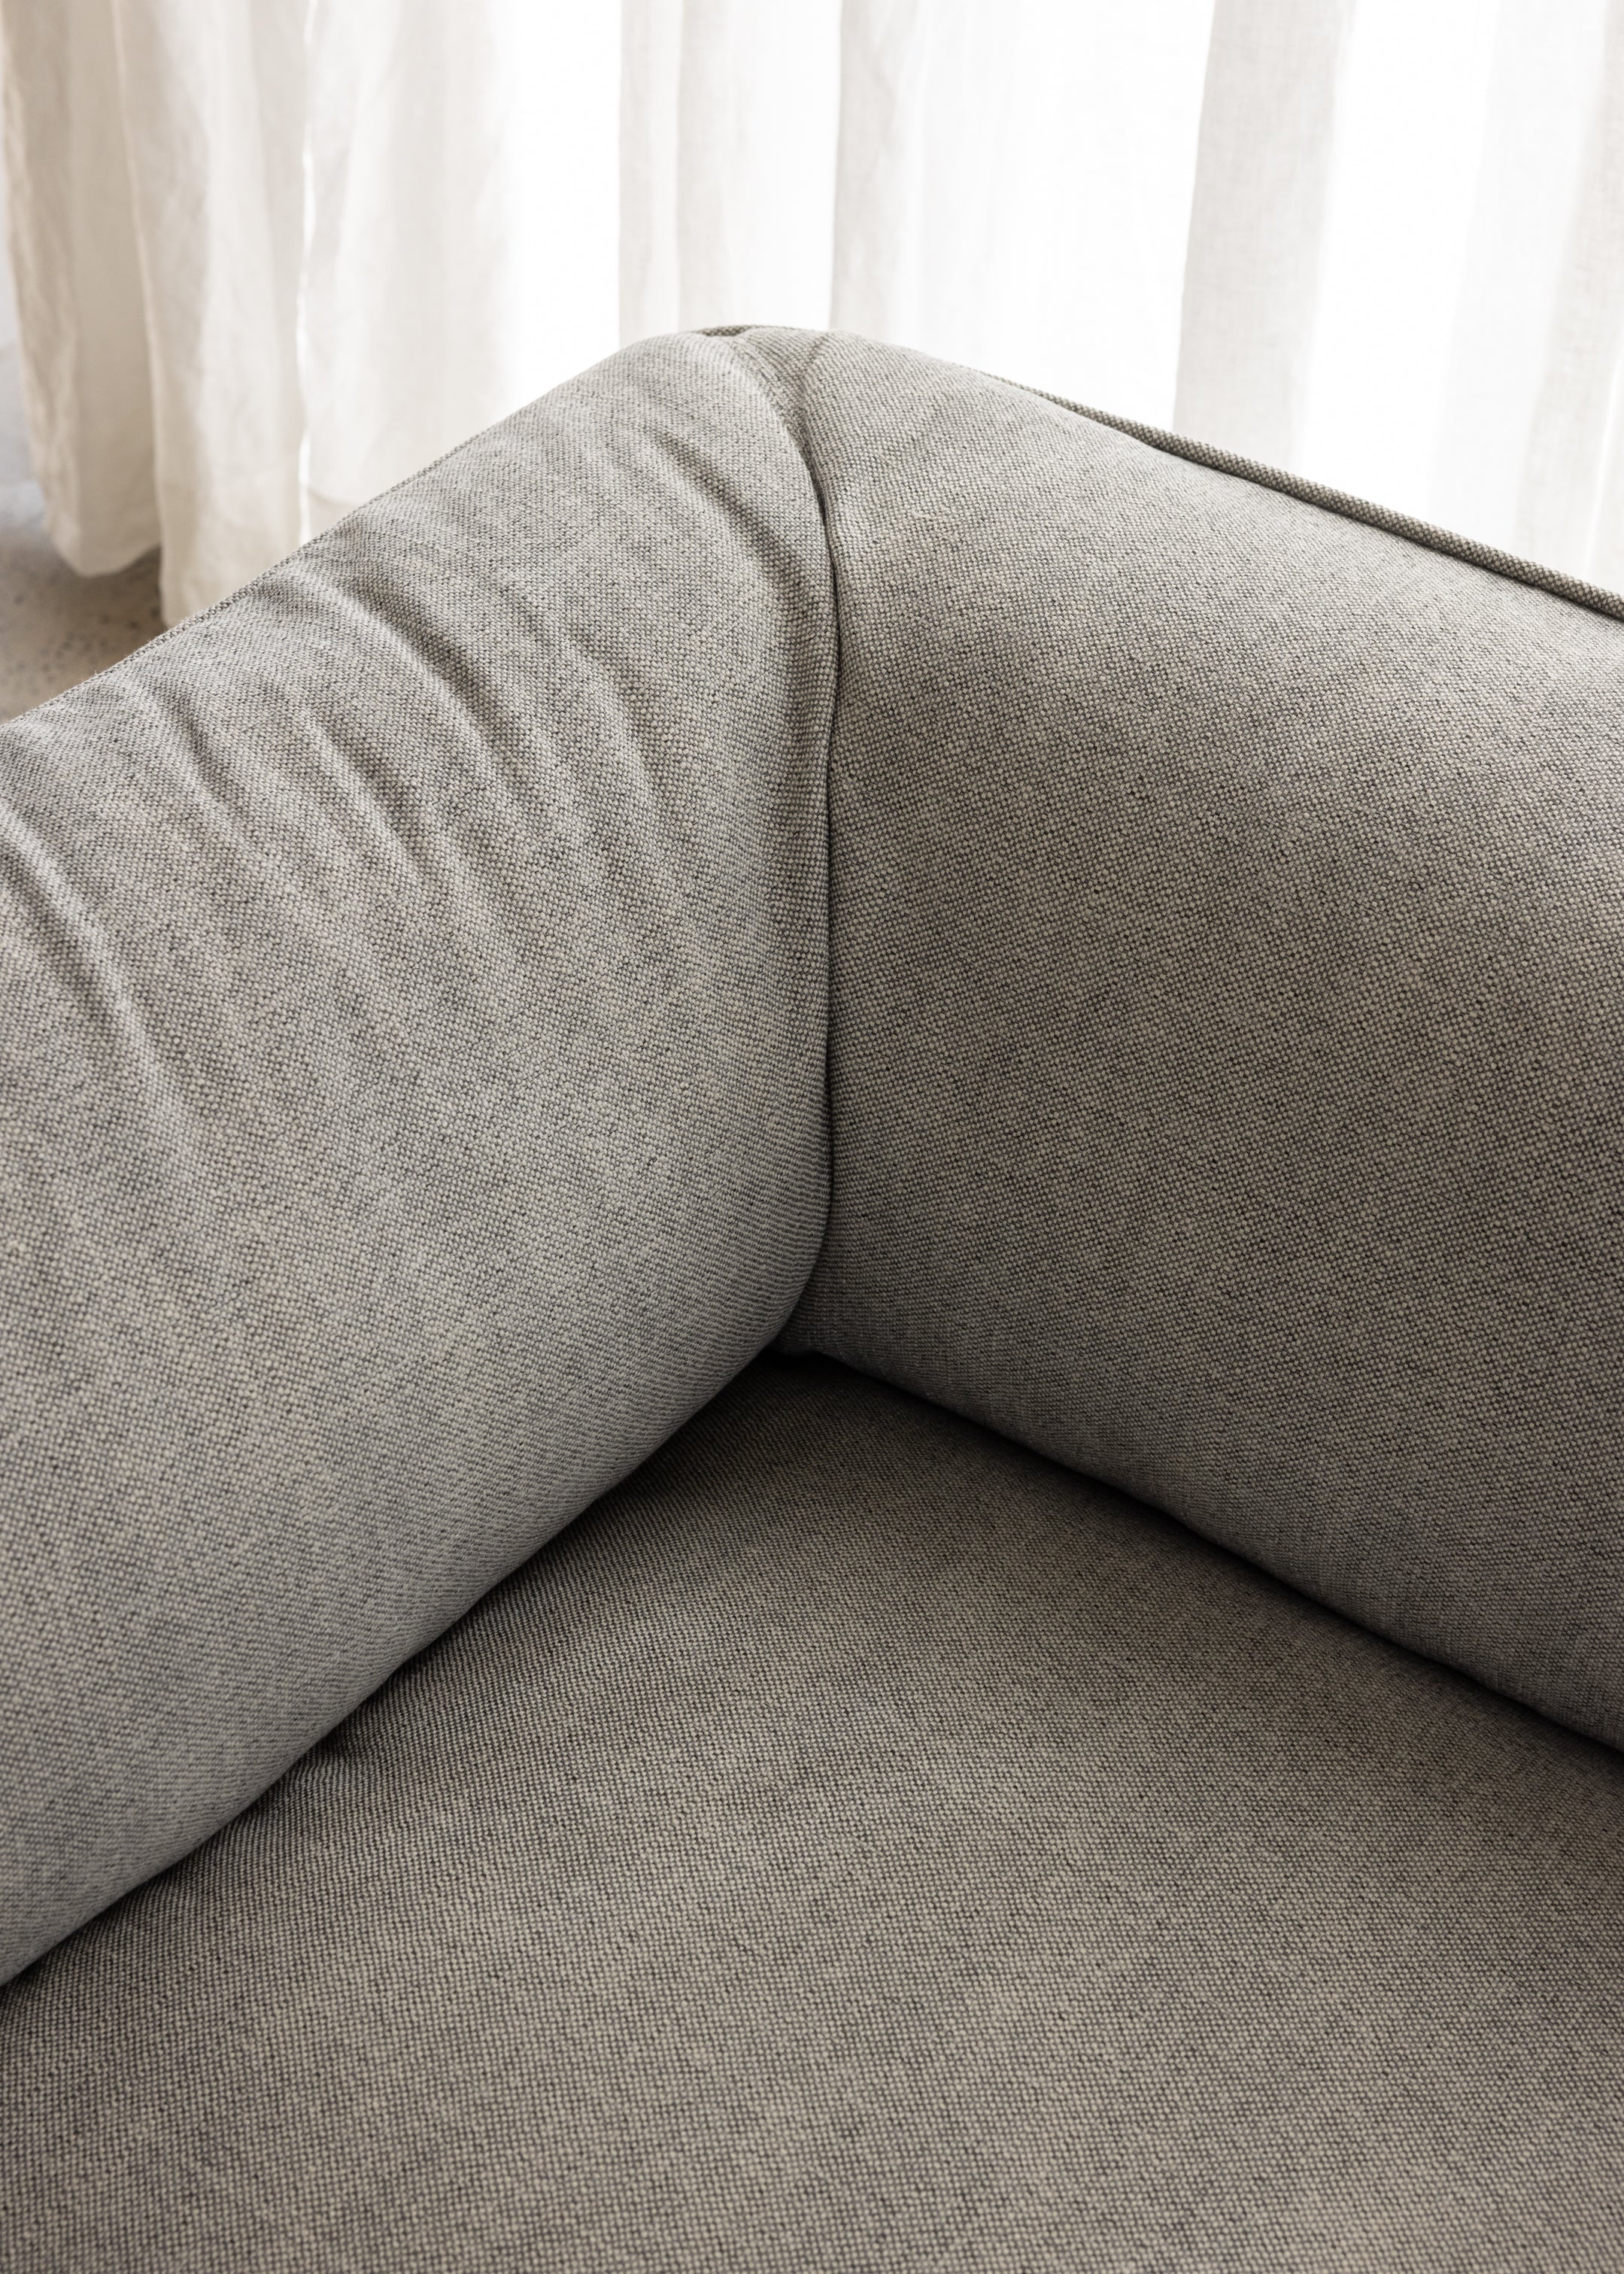 Plum Sofa 3 Seat / Santa Monica Smooth Grey